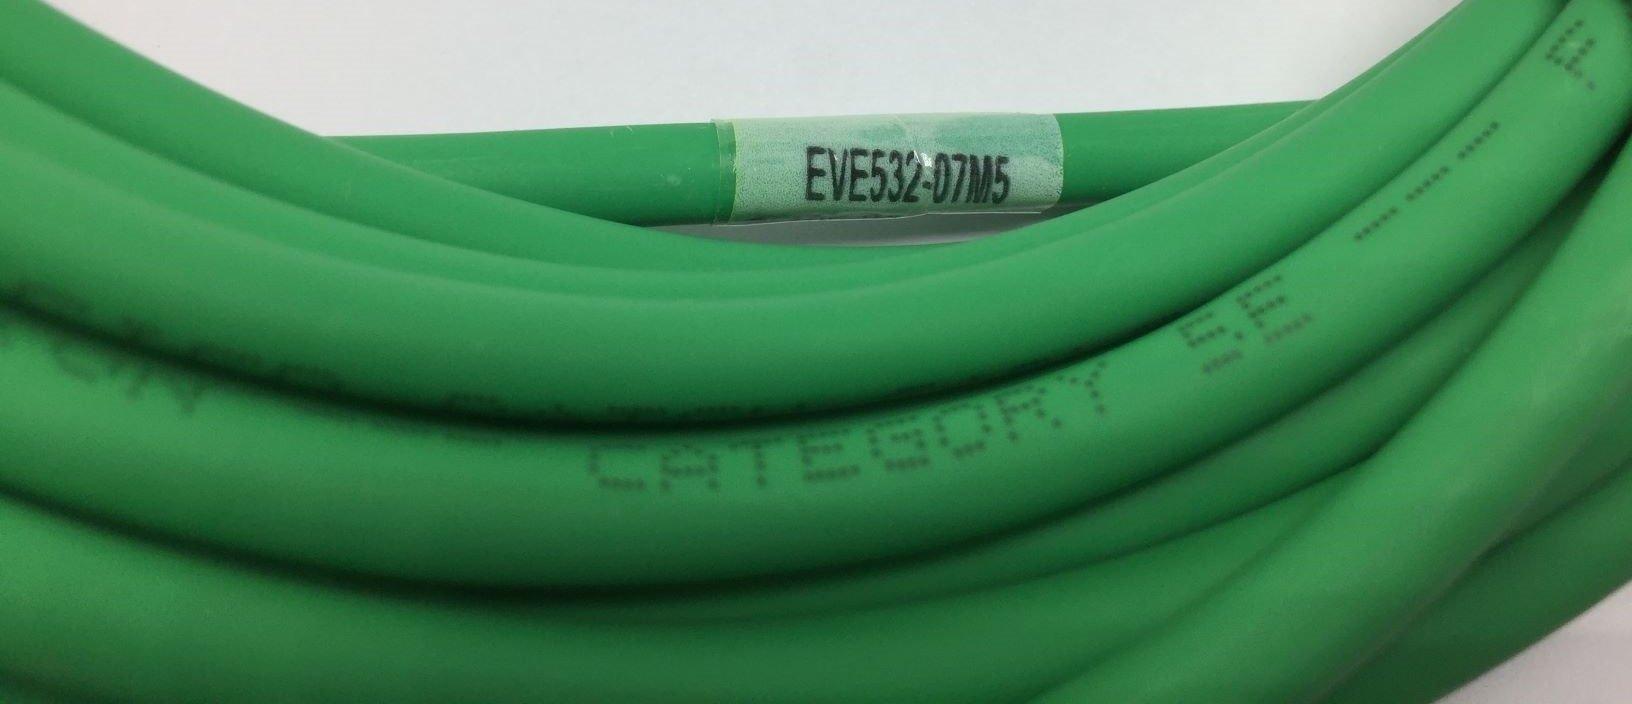 NEW BLACK BOX EVE530-07M5 CAT5E PATCH CABLE F/UTP LSZH GREEN 7.5M 